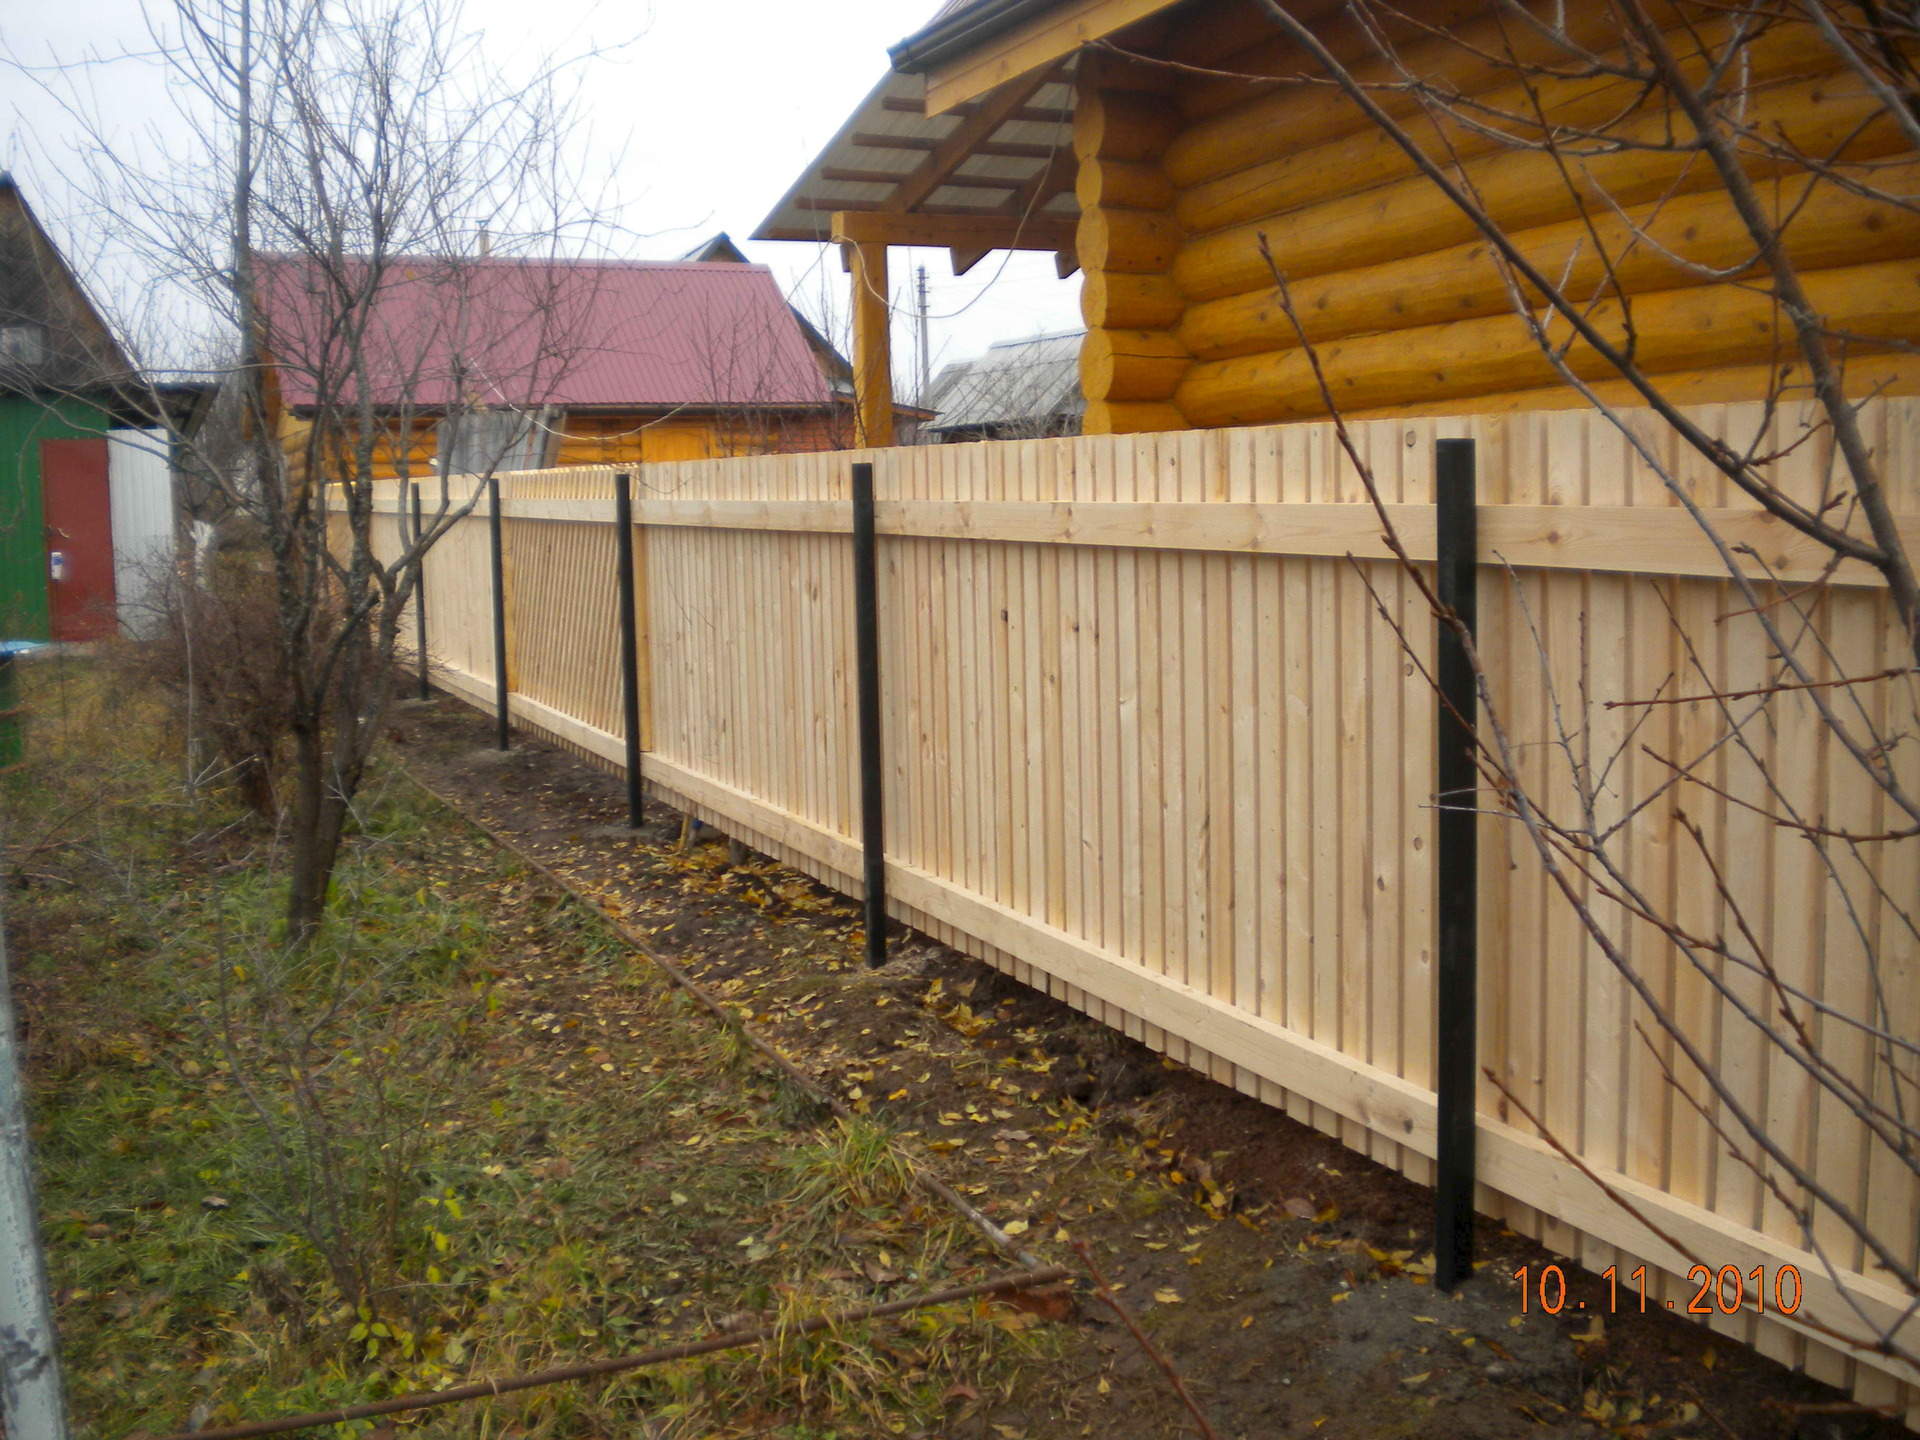 Забор на соседском участке. Забор между участками. Забор между соседями. Деревянный забор между соседями. Забор между дачными участками.